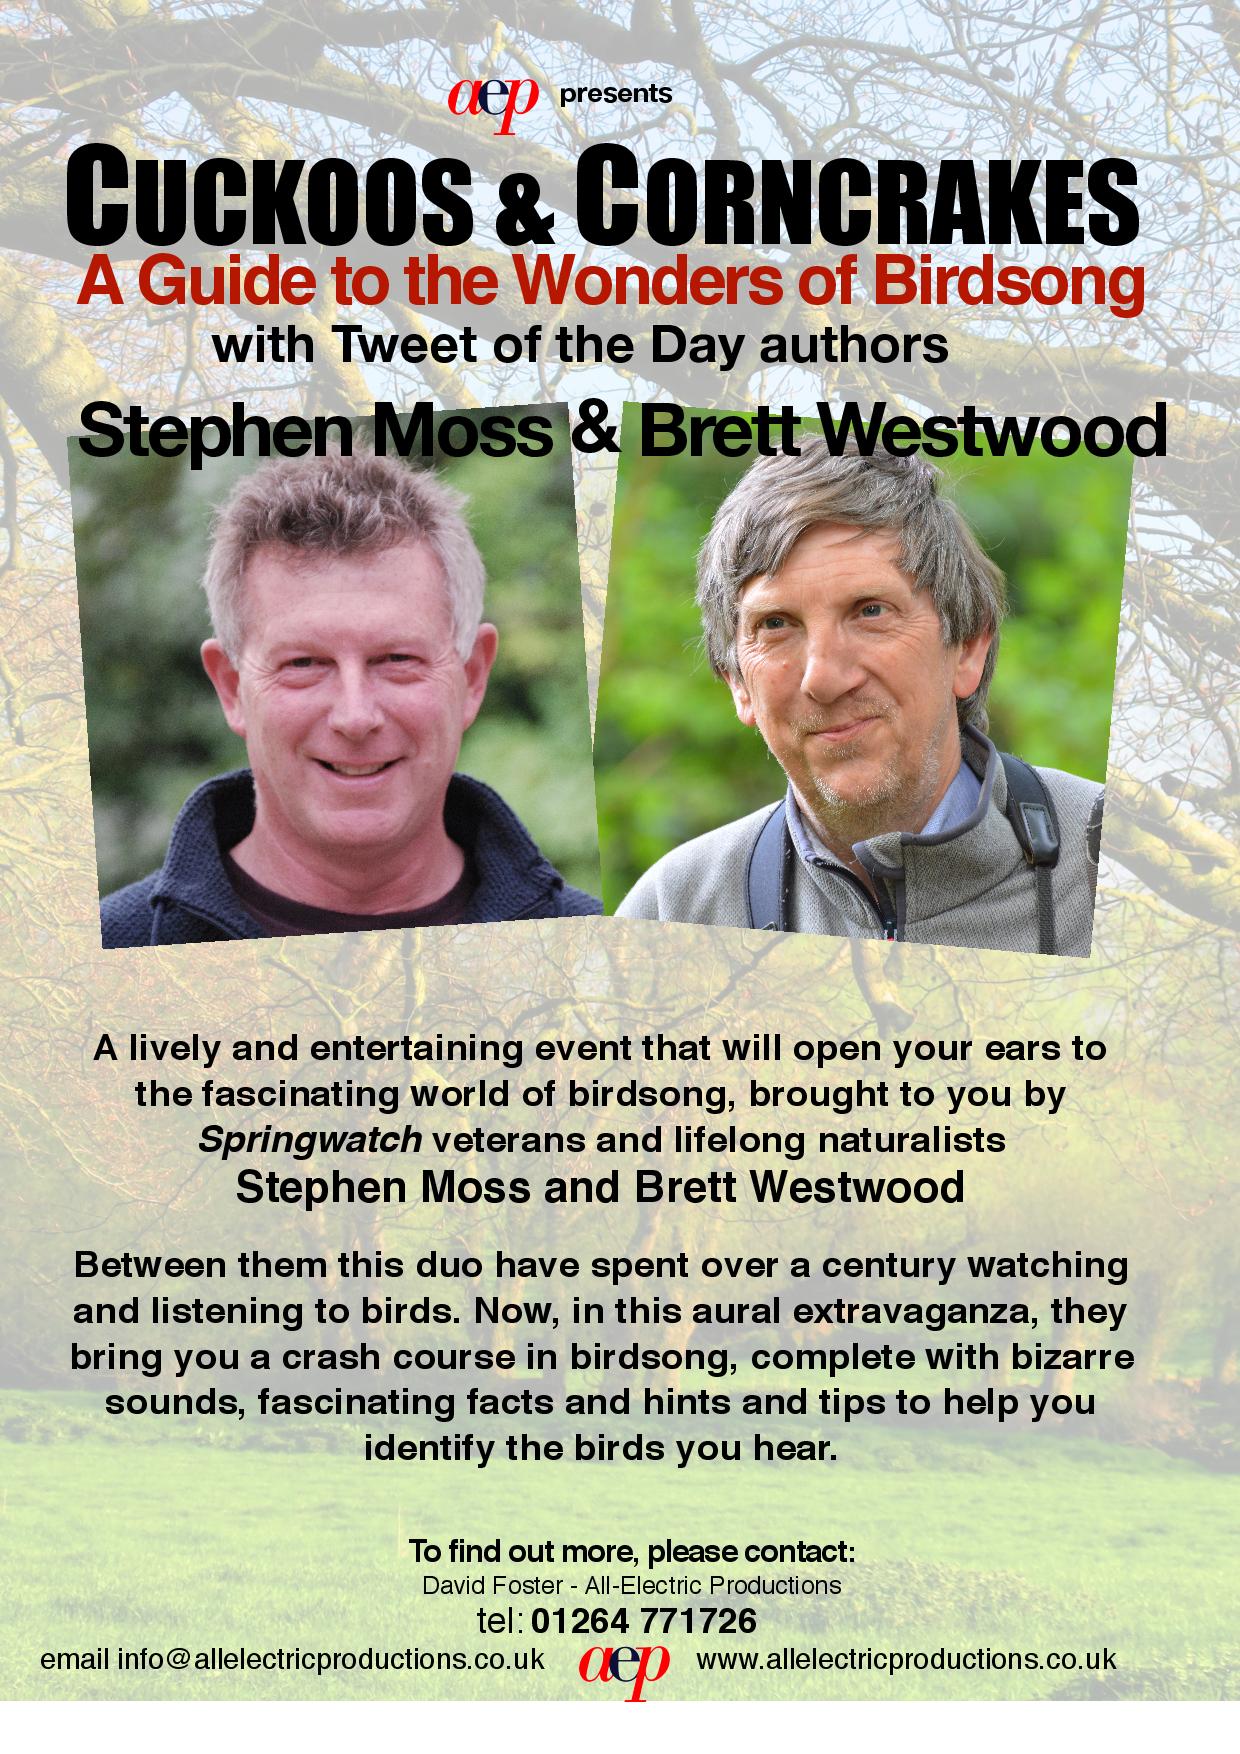 Brett Westwood and Stephen Moss